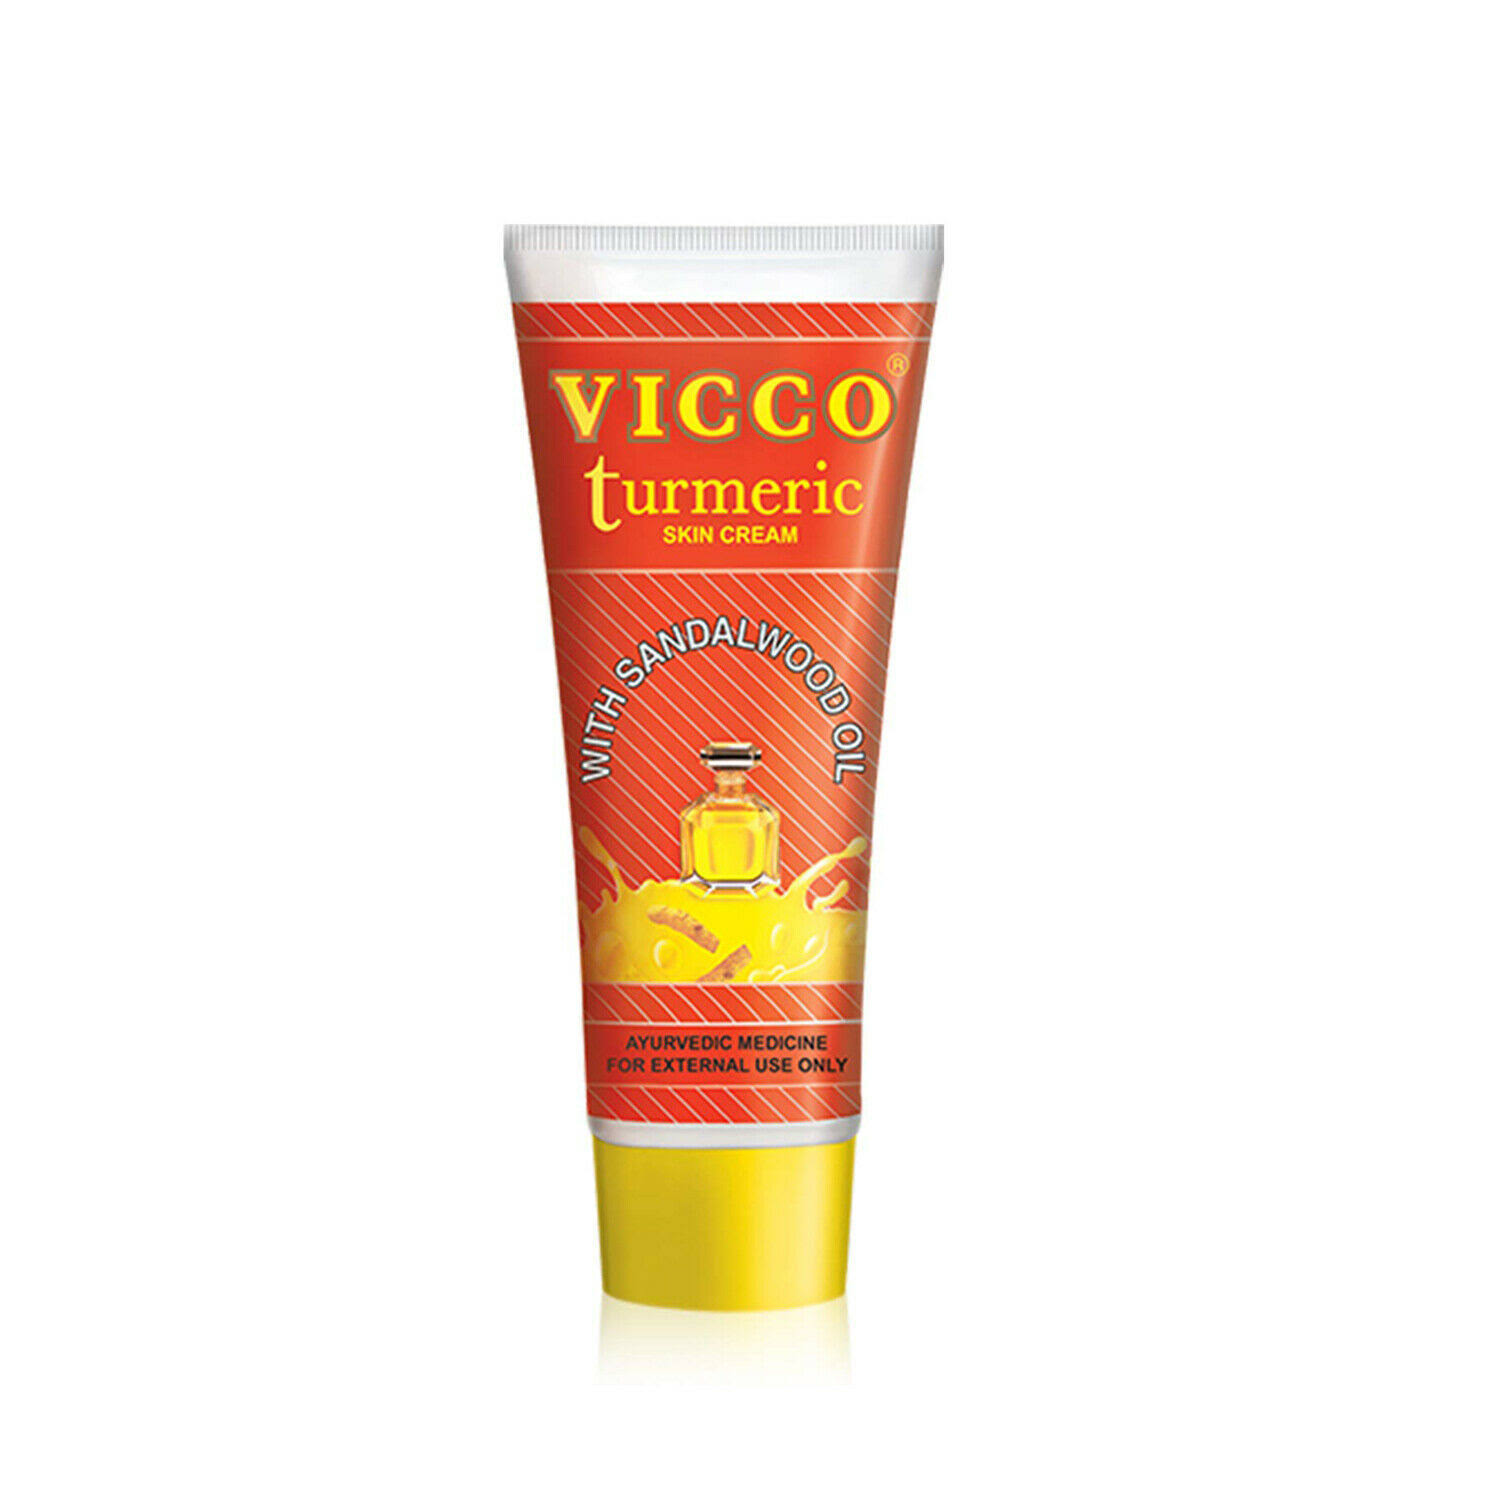 Vicco Turmeric Herbal Skin Cream with Sandlewood Oil